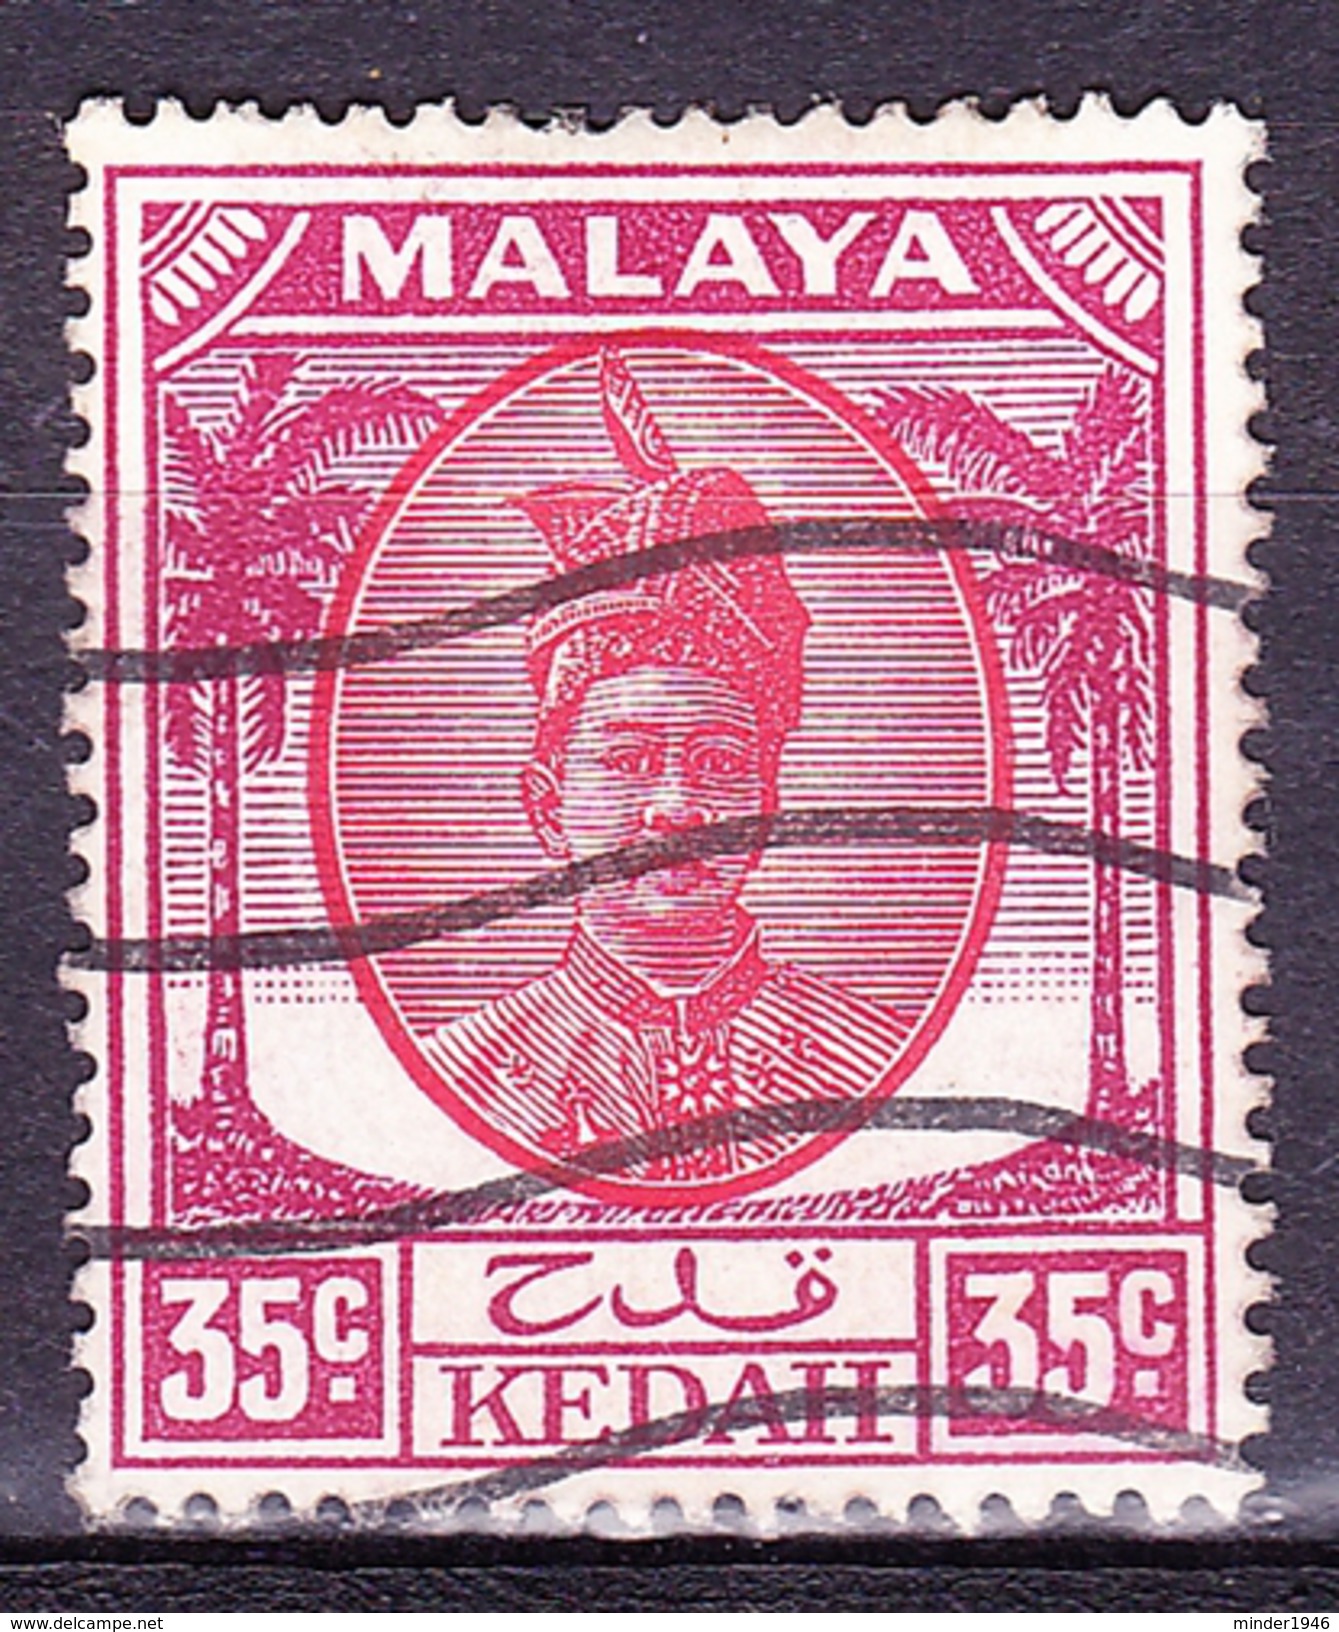 MAYALA KEDAH 1952 35 Cents Scarlet & Purple SG85b Fine Used - Kedah